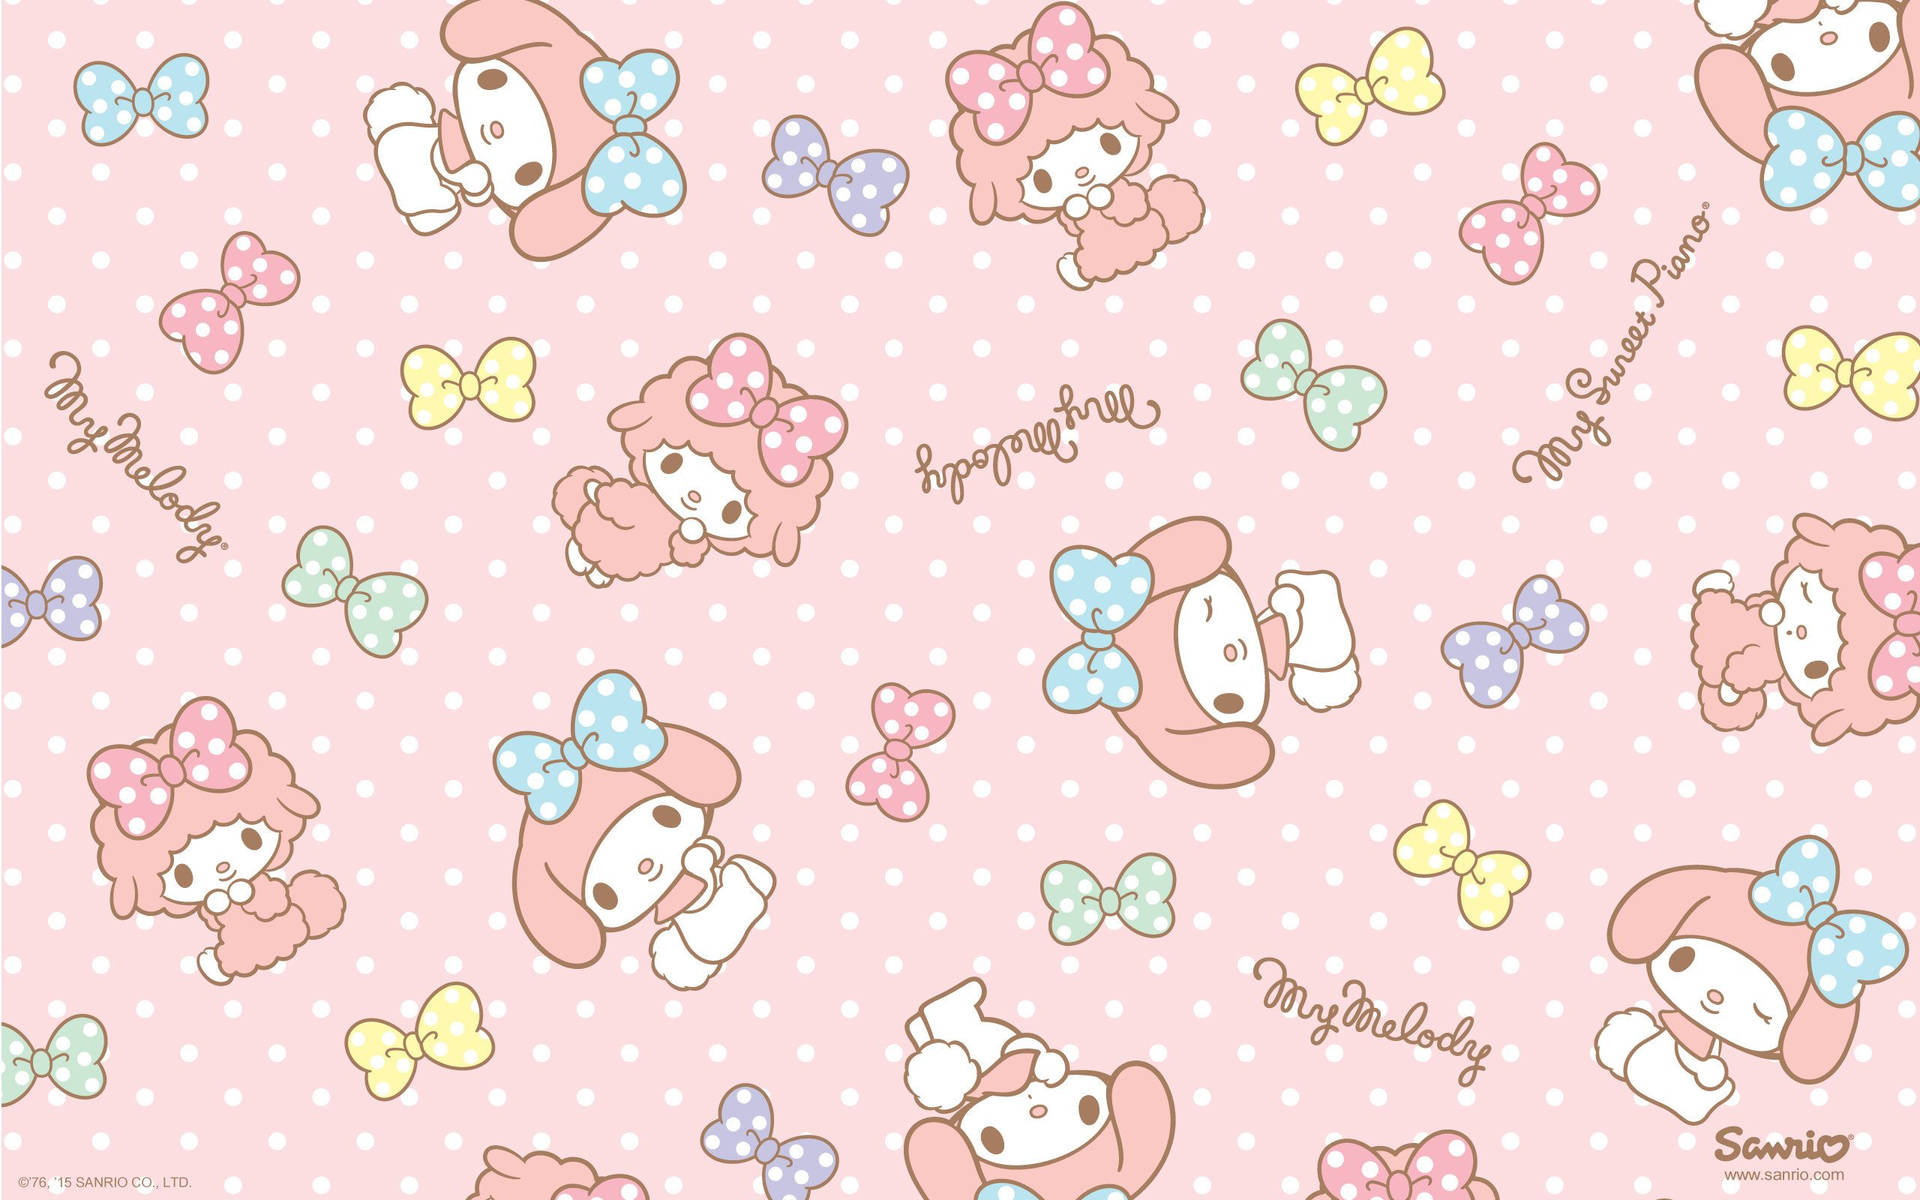 Cute Sanrio Background Wallpaper